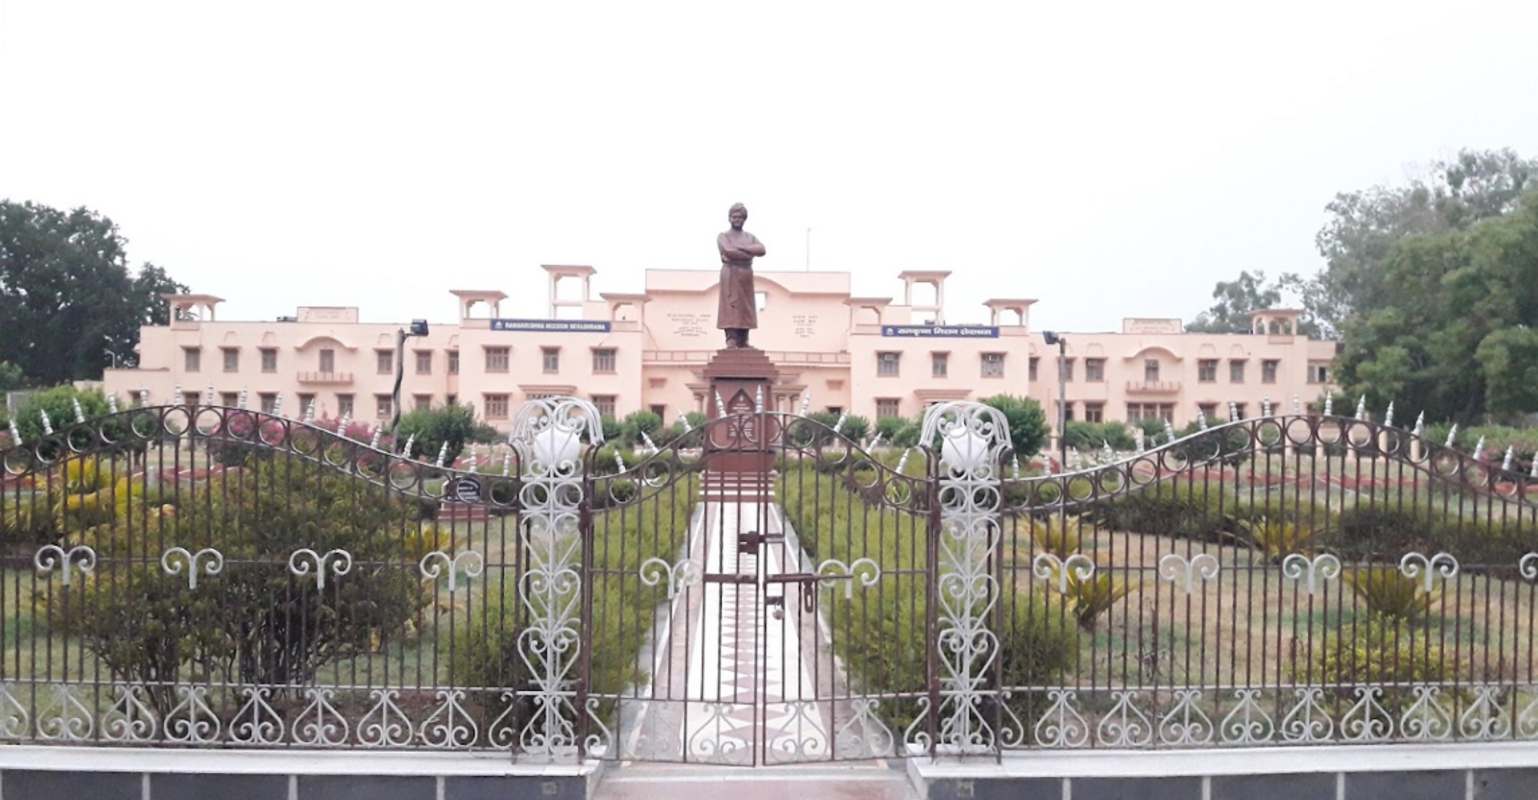 Ramakrishna Mission Sevashrama Charitable Hospital